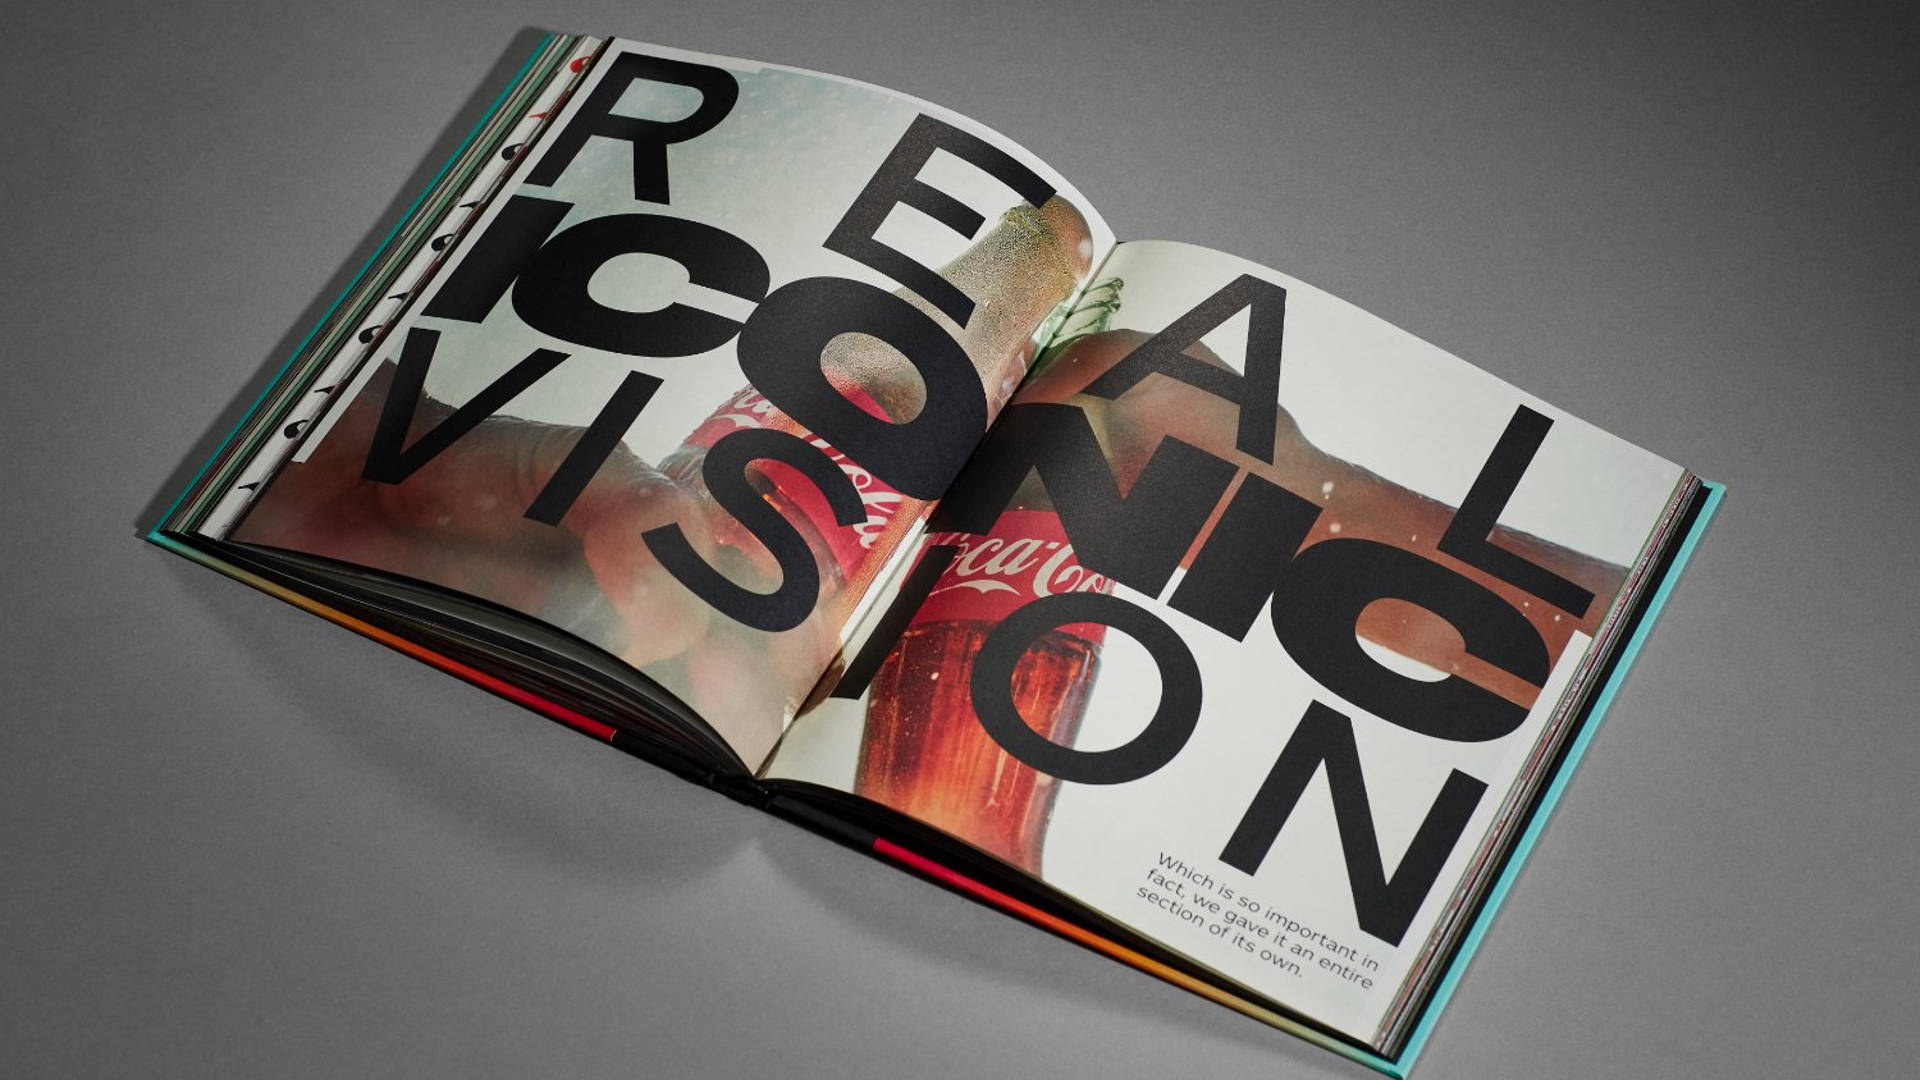 Featured image for The Coca-Cola Design Manifesto Traces The Brand's Design Vision For The Future